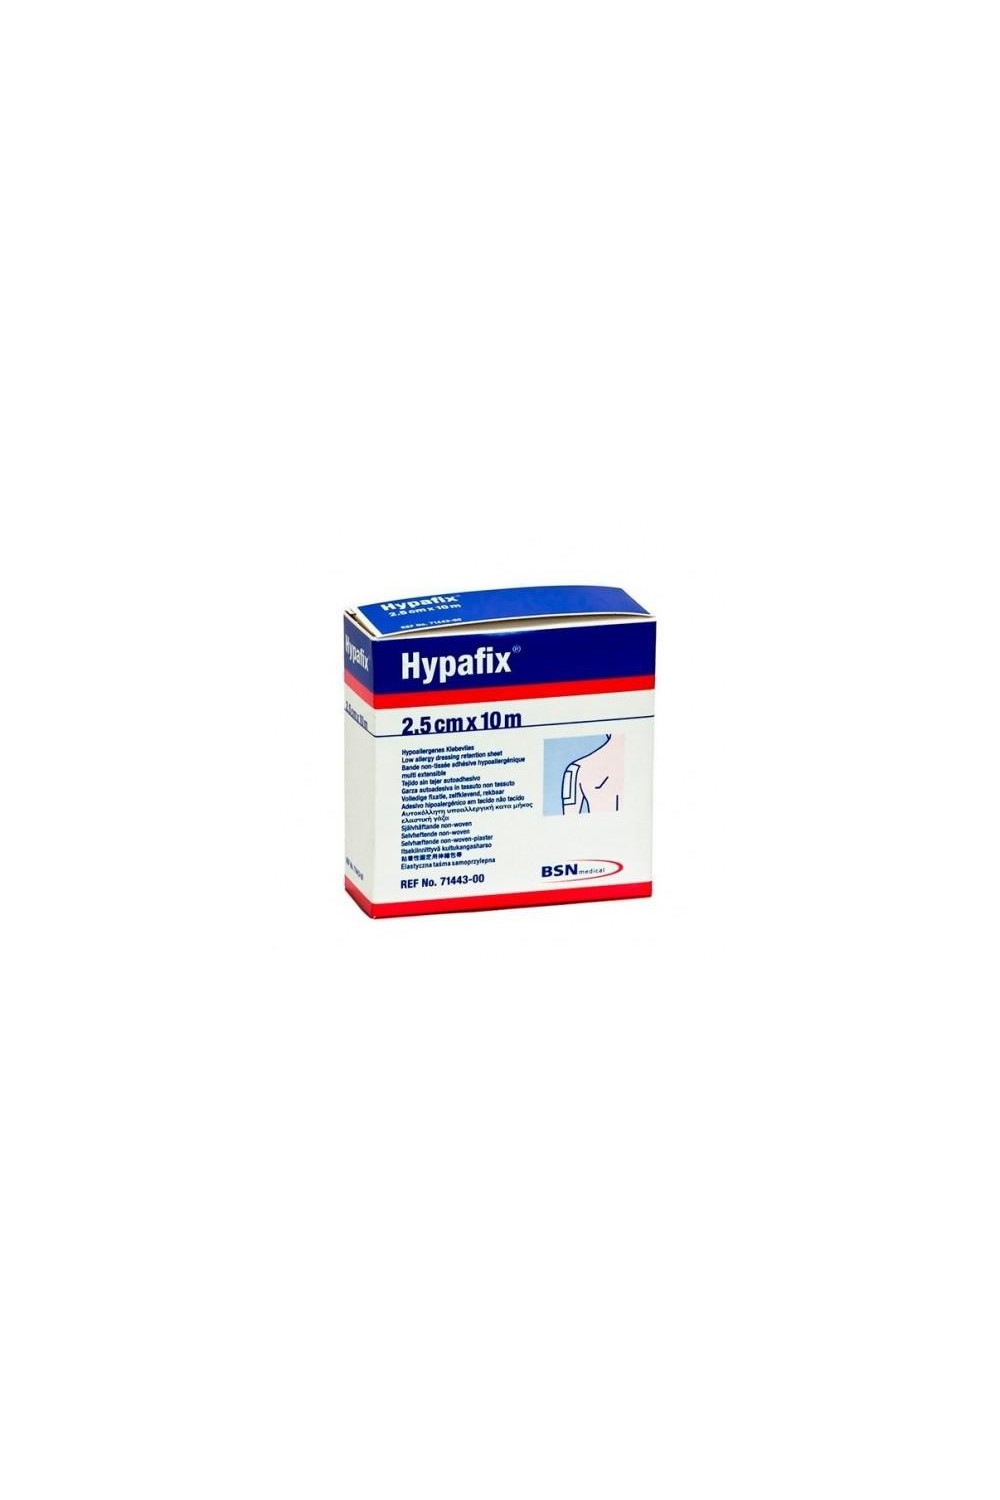 Hypafix Gasa Adhesiva 2,5 Cm X10 M Bsn Medical